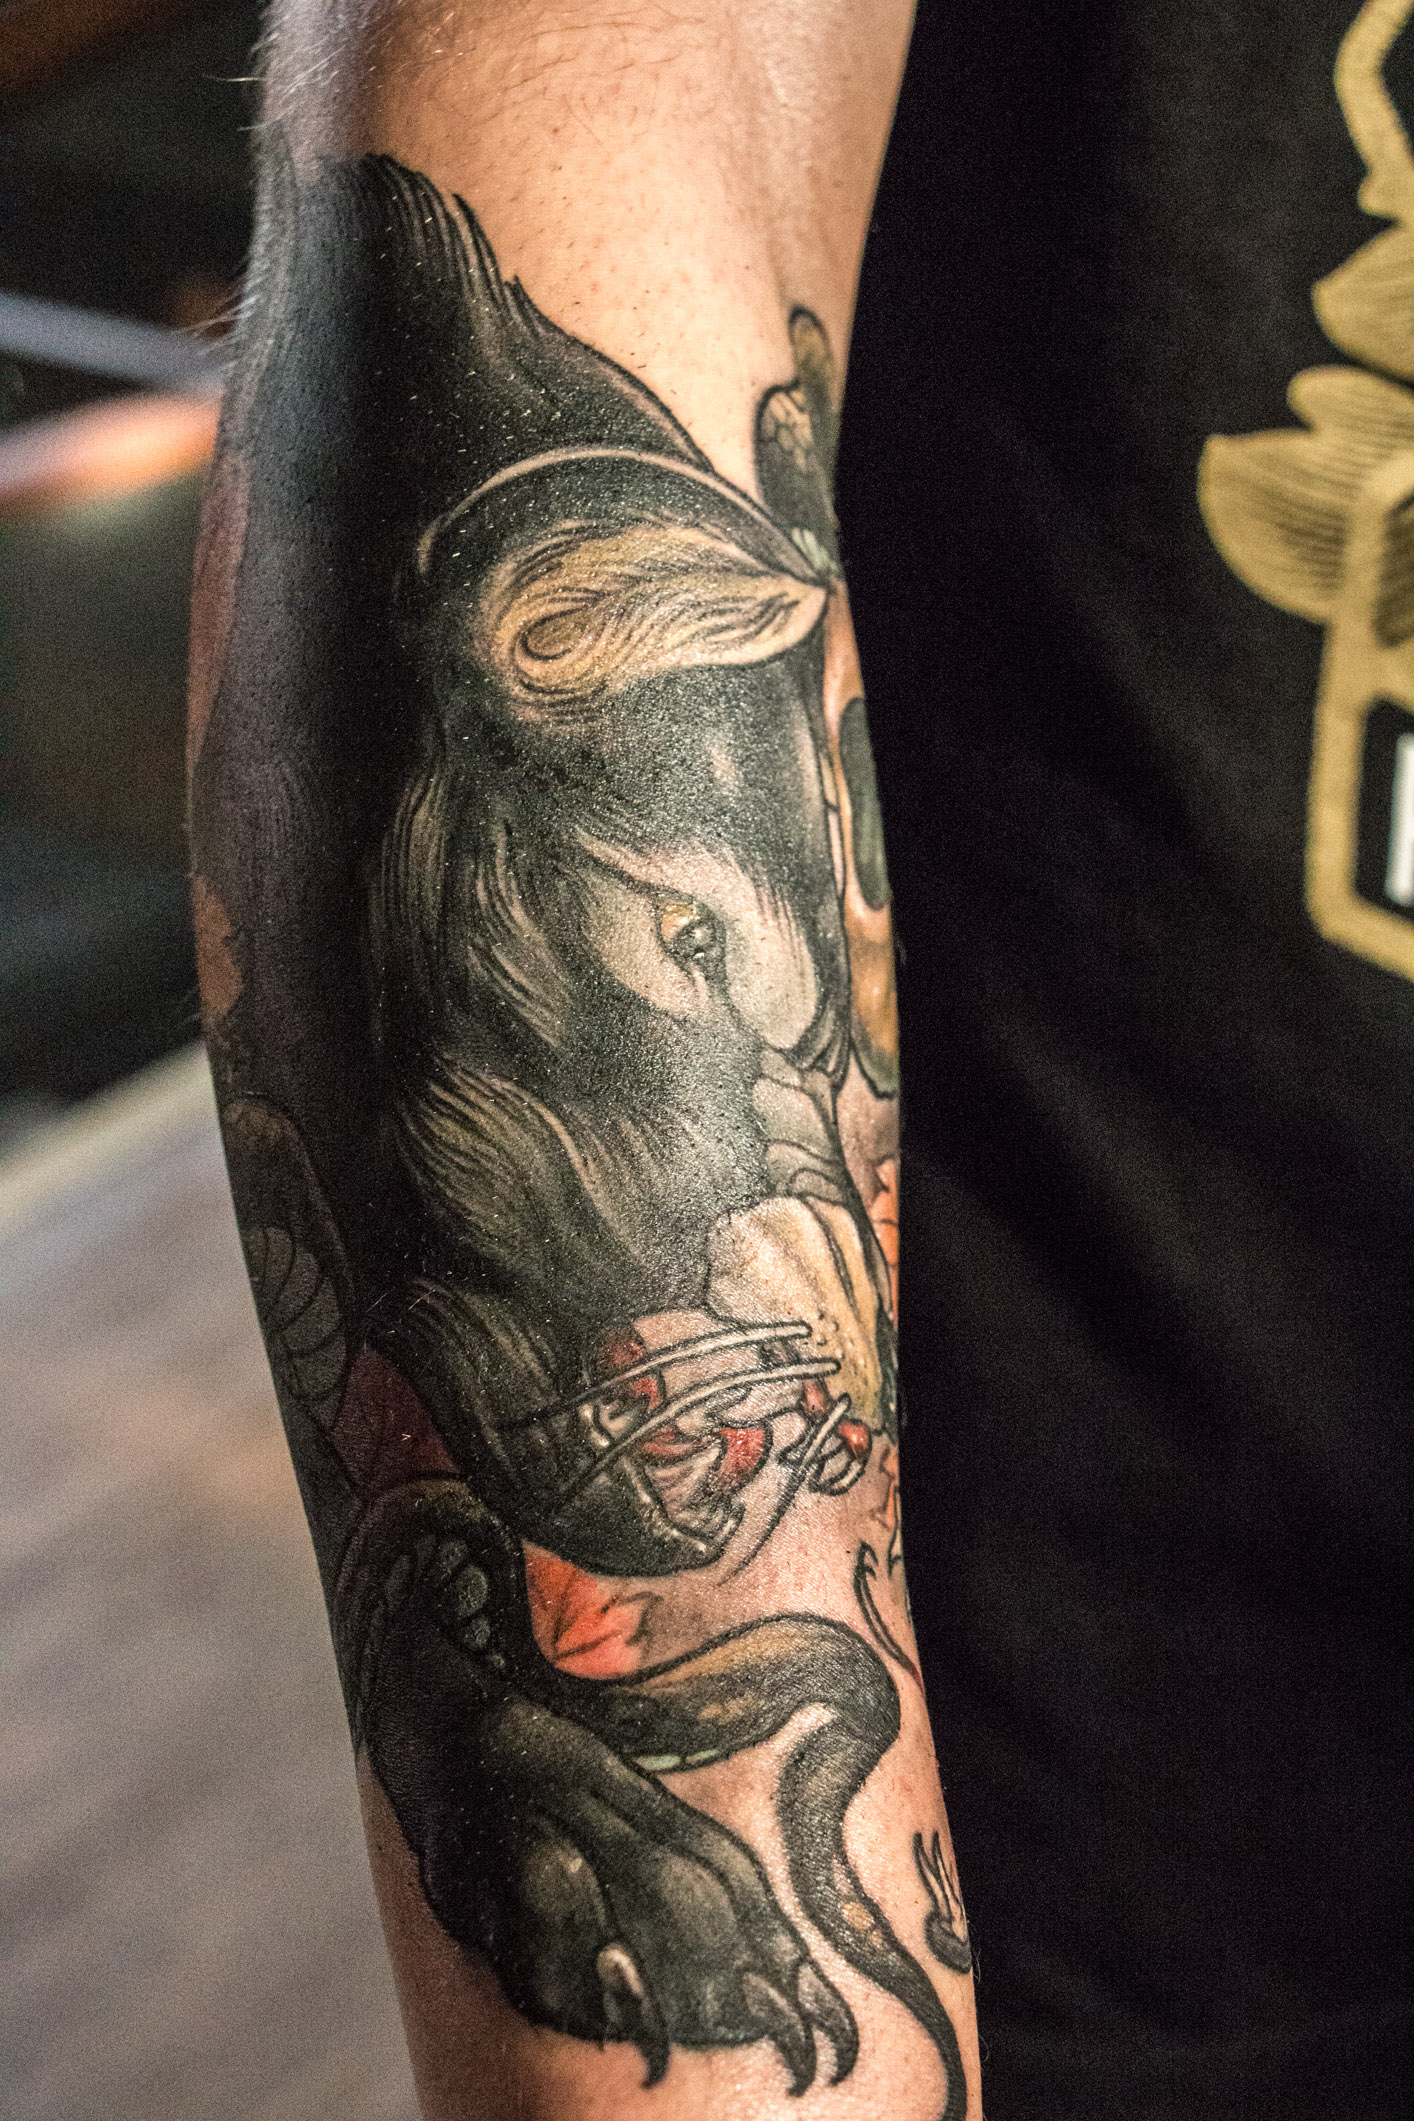 Dino : "C'est un tatouage d'Alex Gotza de l'atelier Dirty Roses tattoo".